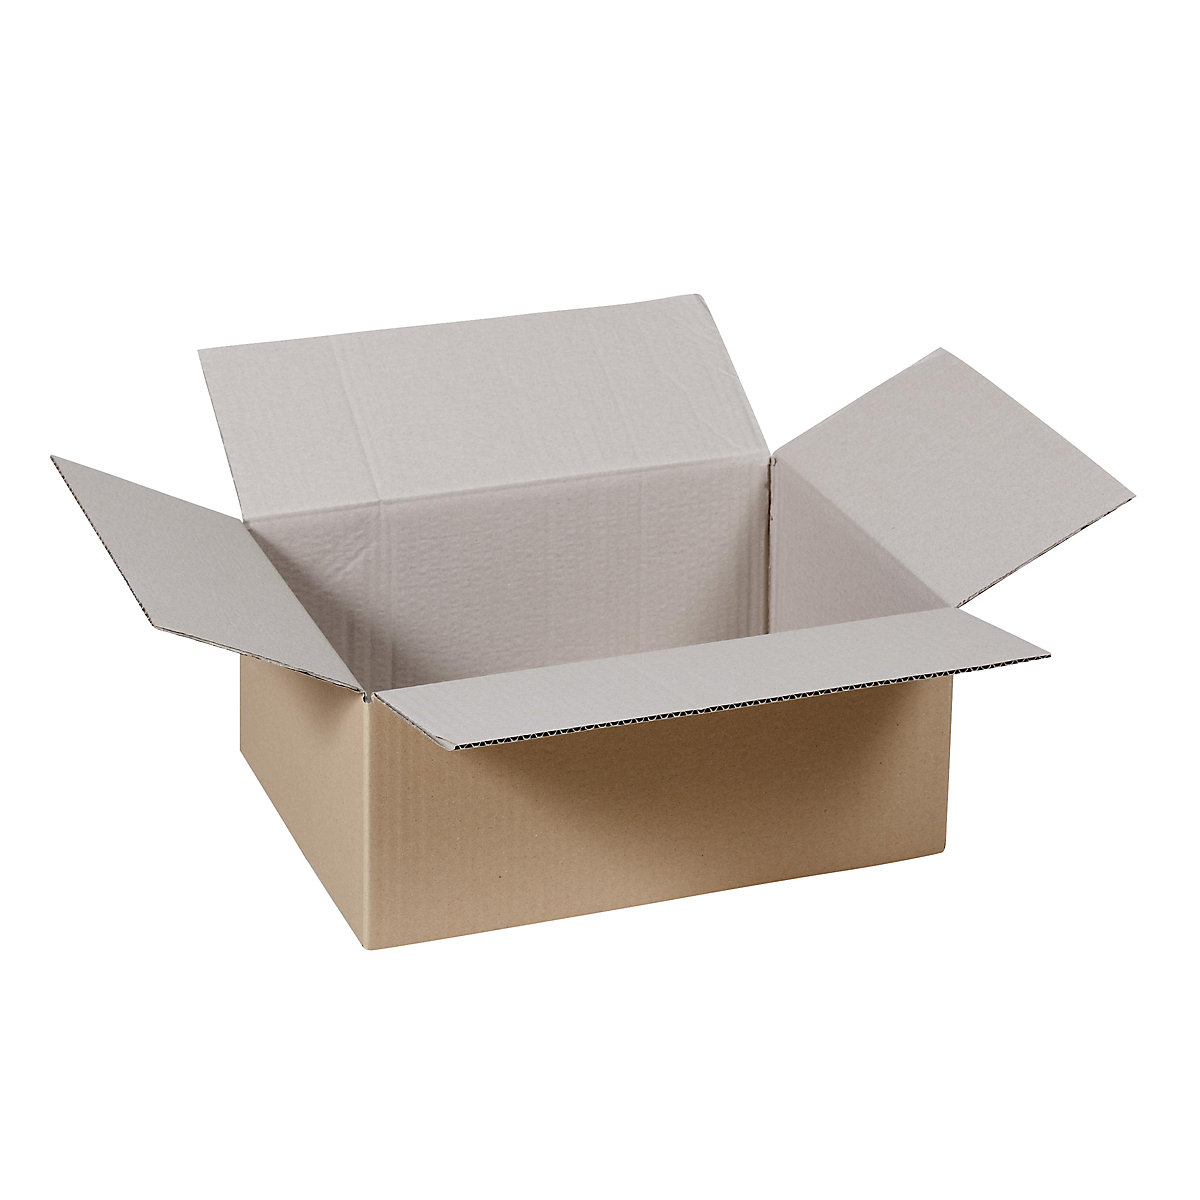 Folding cardboard box, FEFCO 0201, made of single fluted cardboard, internal dimensions 360 x 270 x 160 mm, pack of 50-22